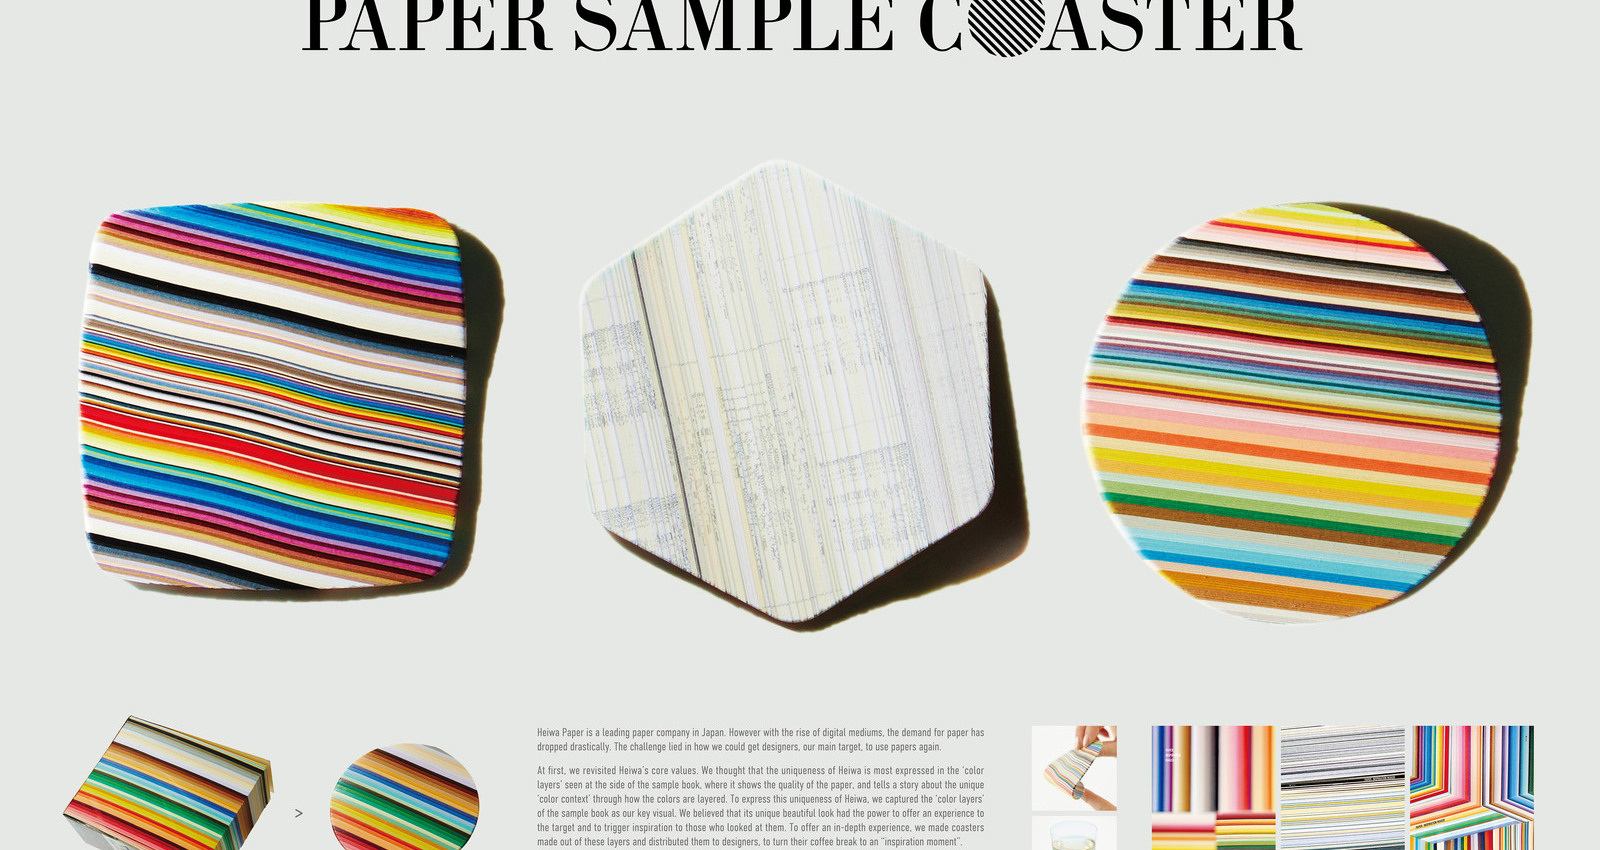 Paper Sample Coaster